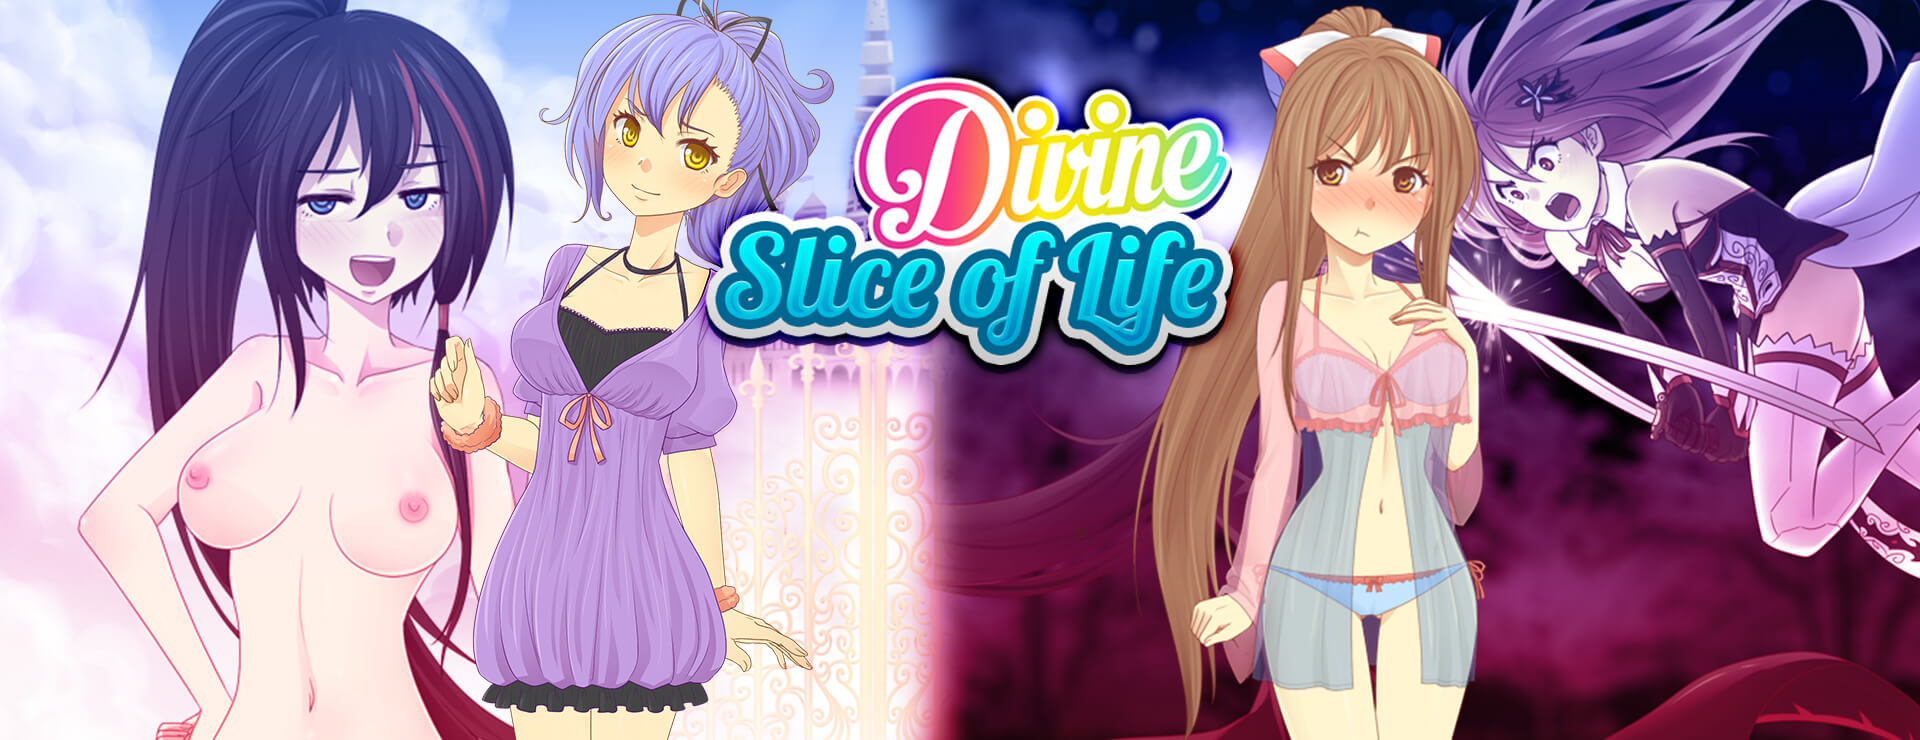 Divine Slice of Life - Visual Novel Game